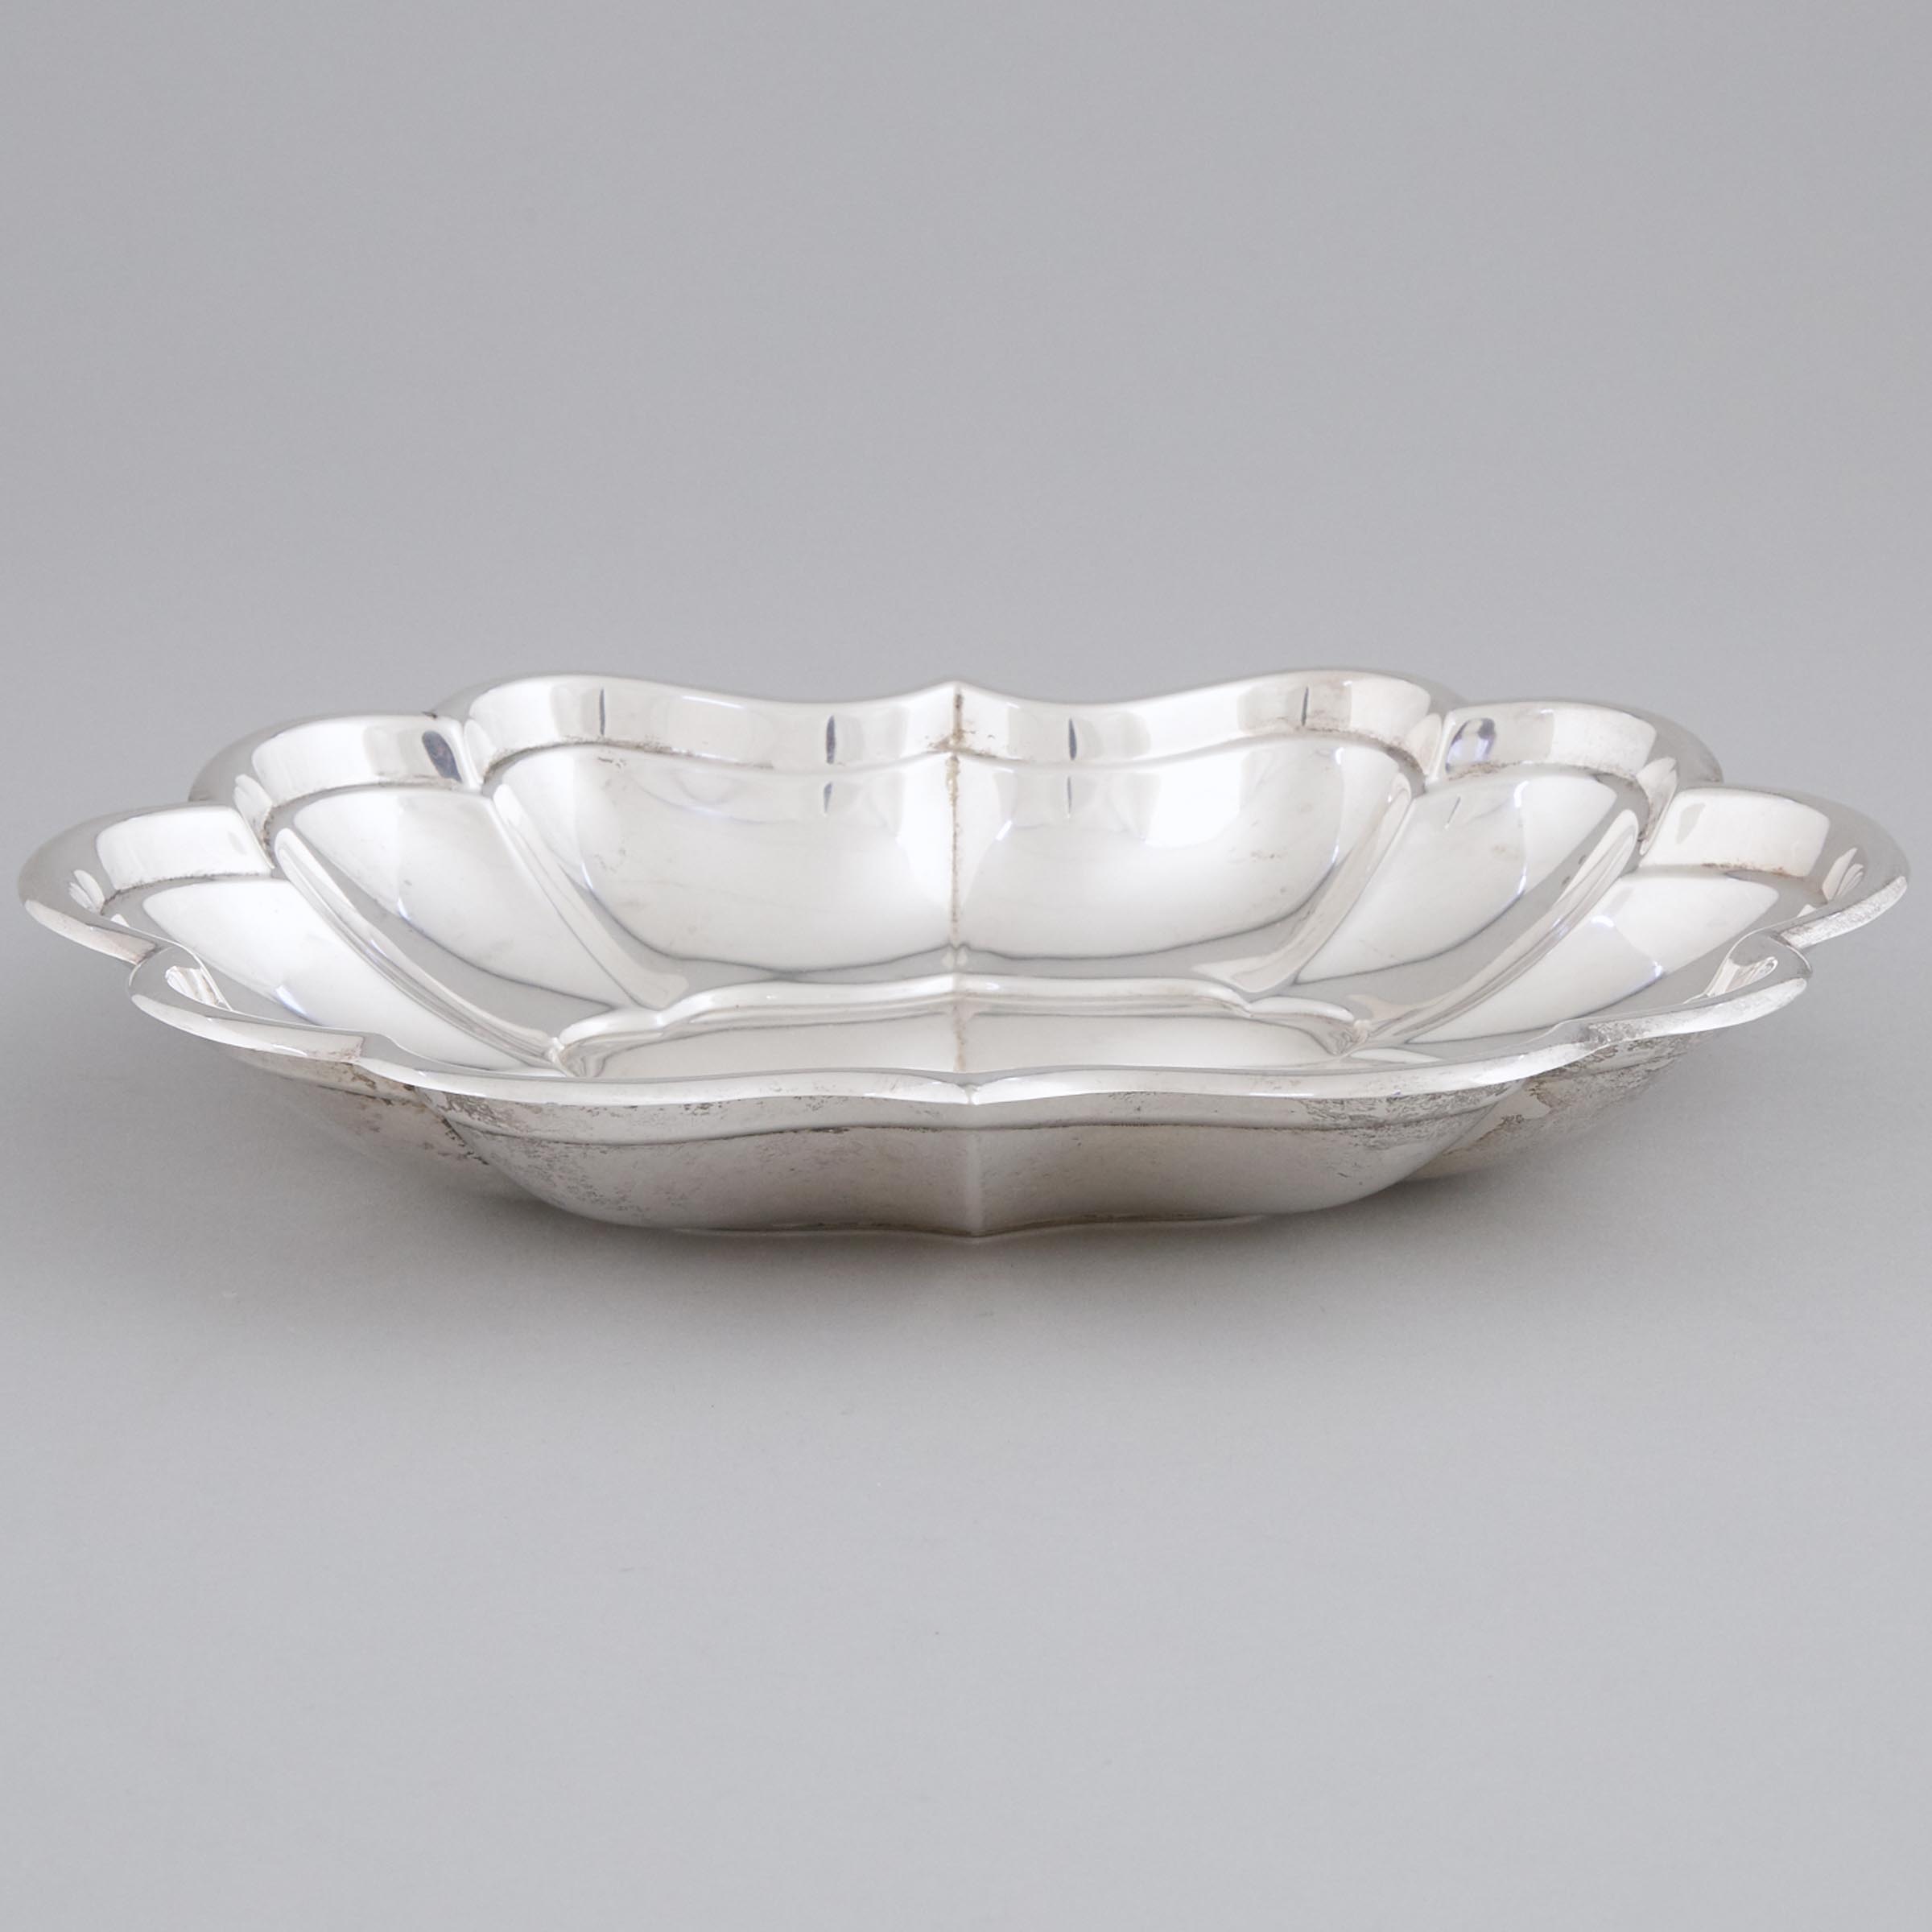 American Silver 'Windsor' Lobed Oval Dish, Reed & Barton, Taunton, Mass., 20th century